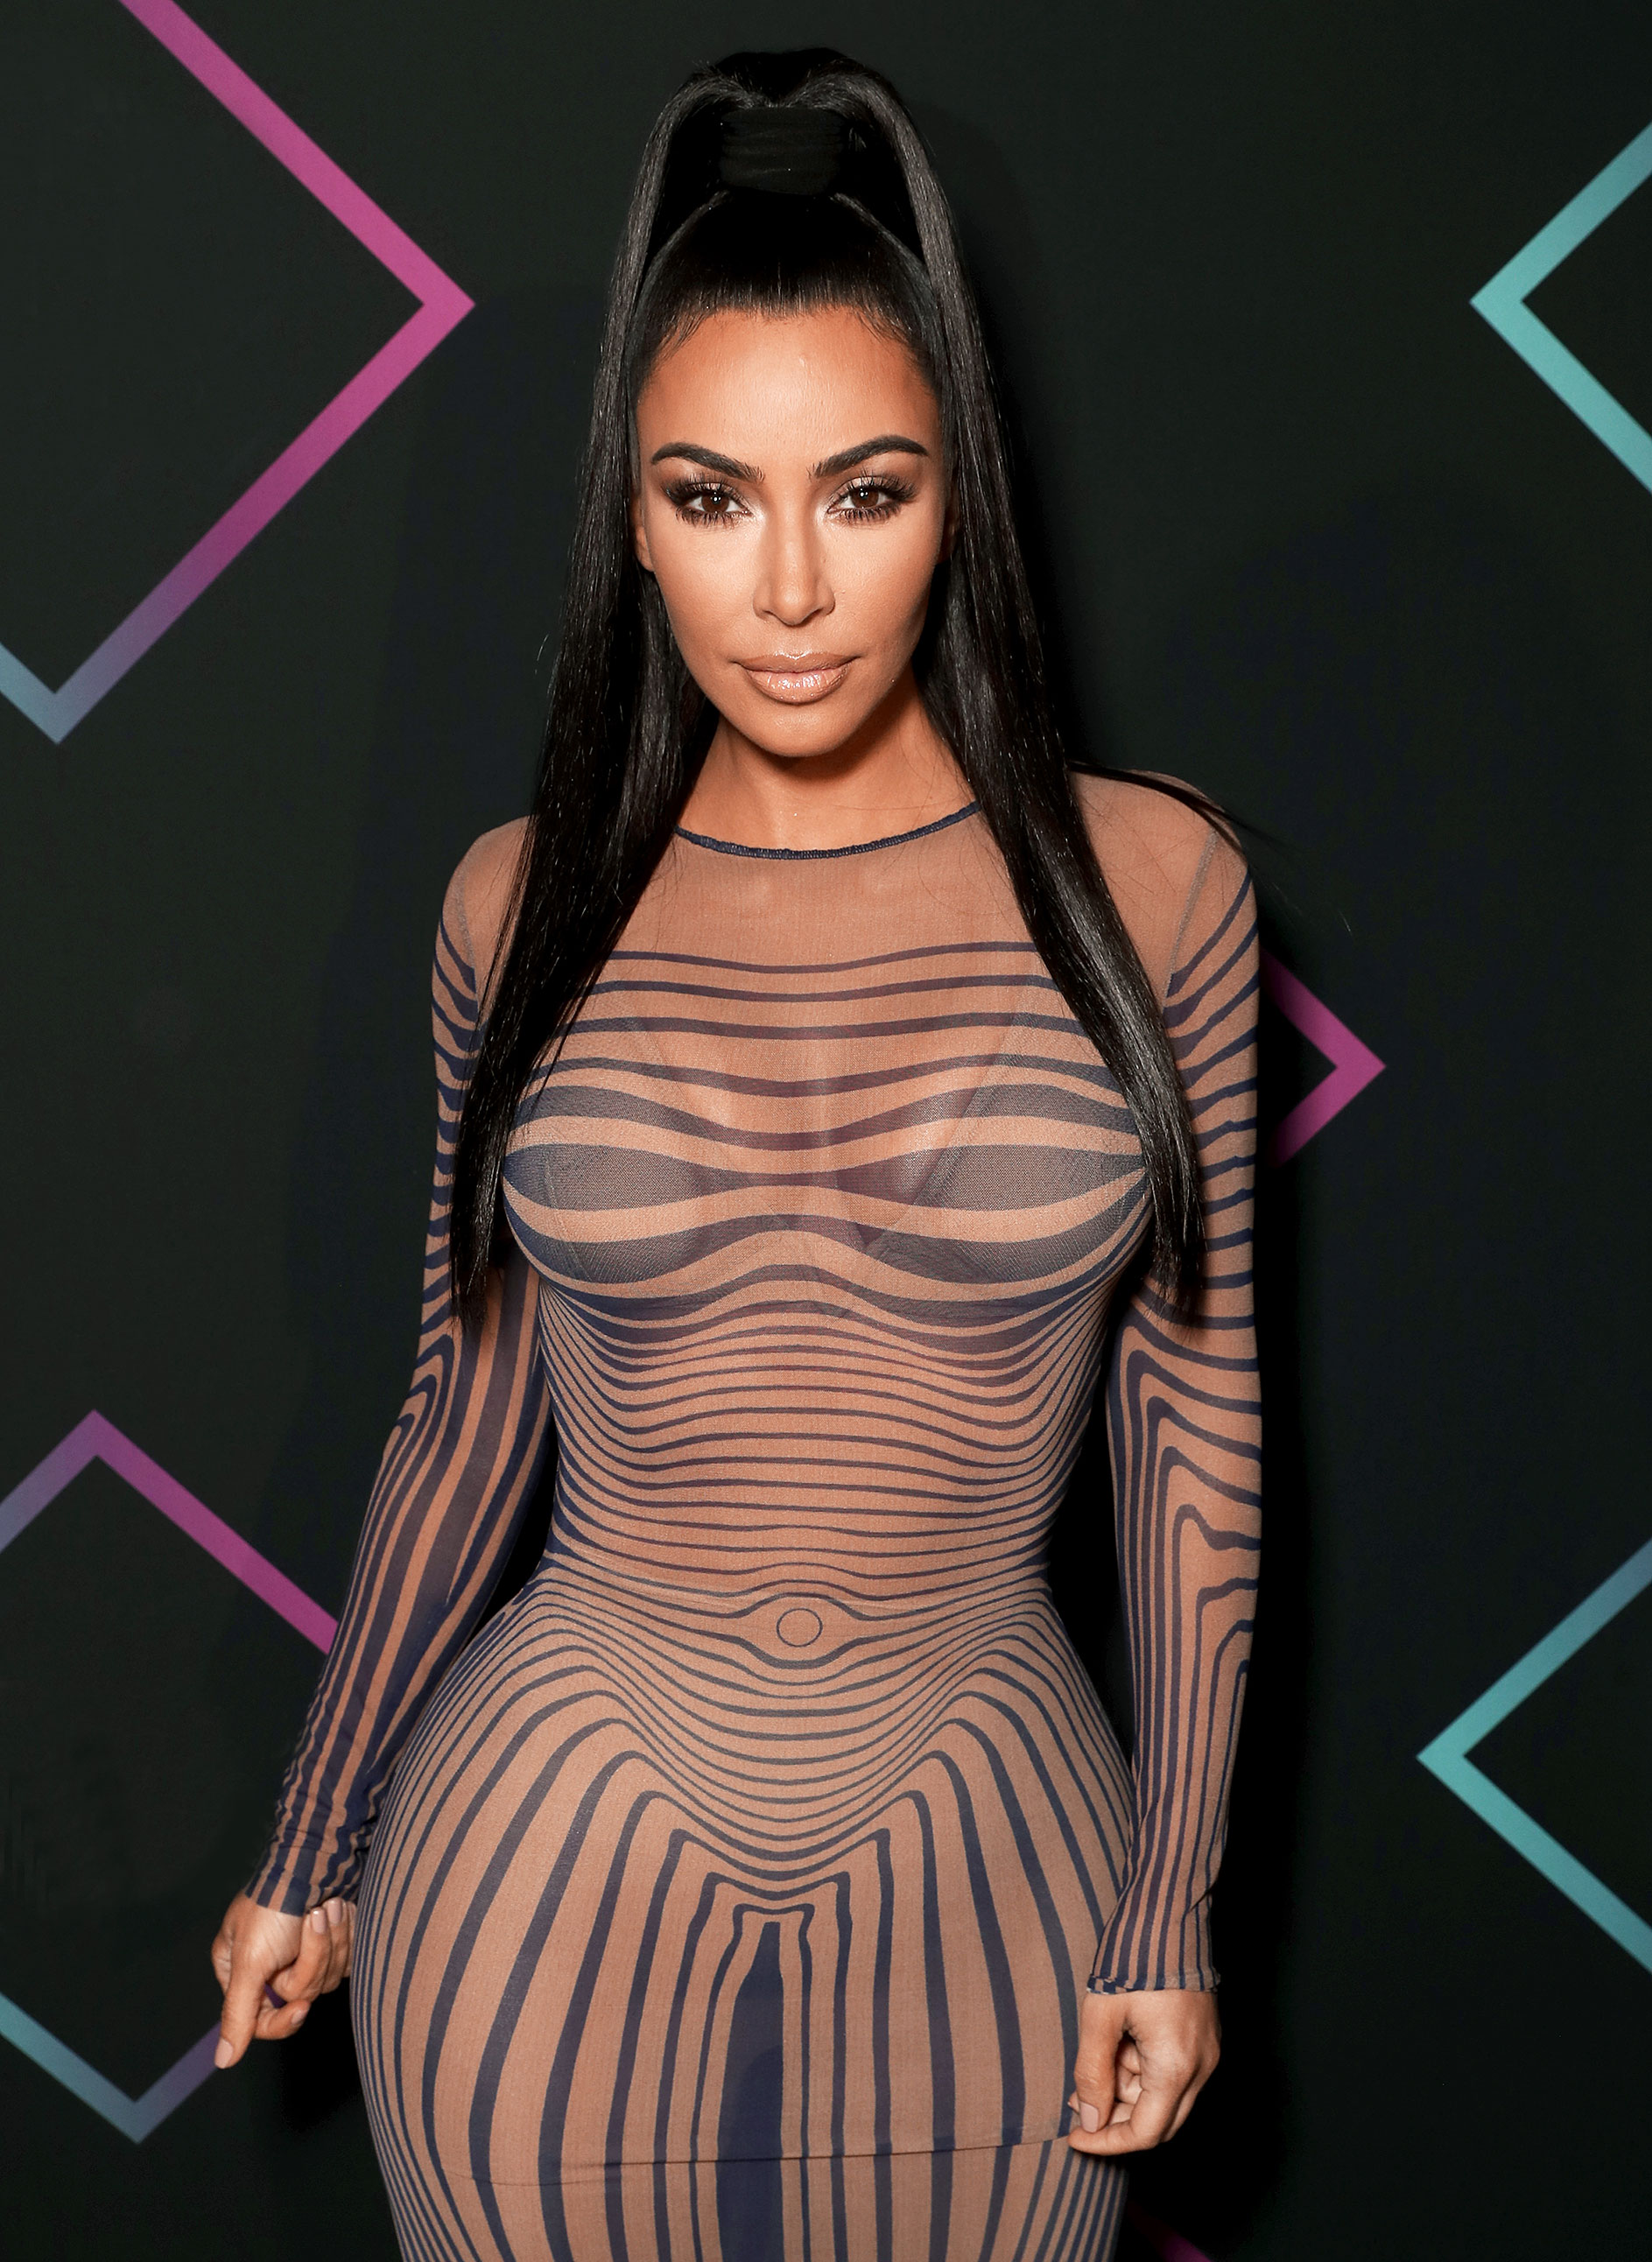 Kim Kardashian to drop Kimono name from shapewear after